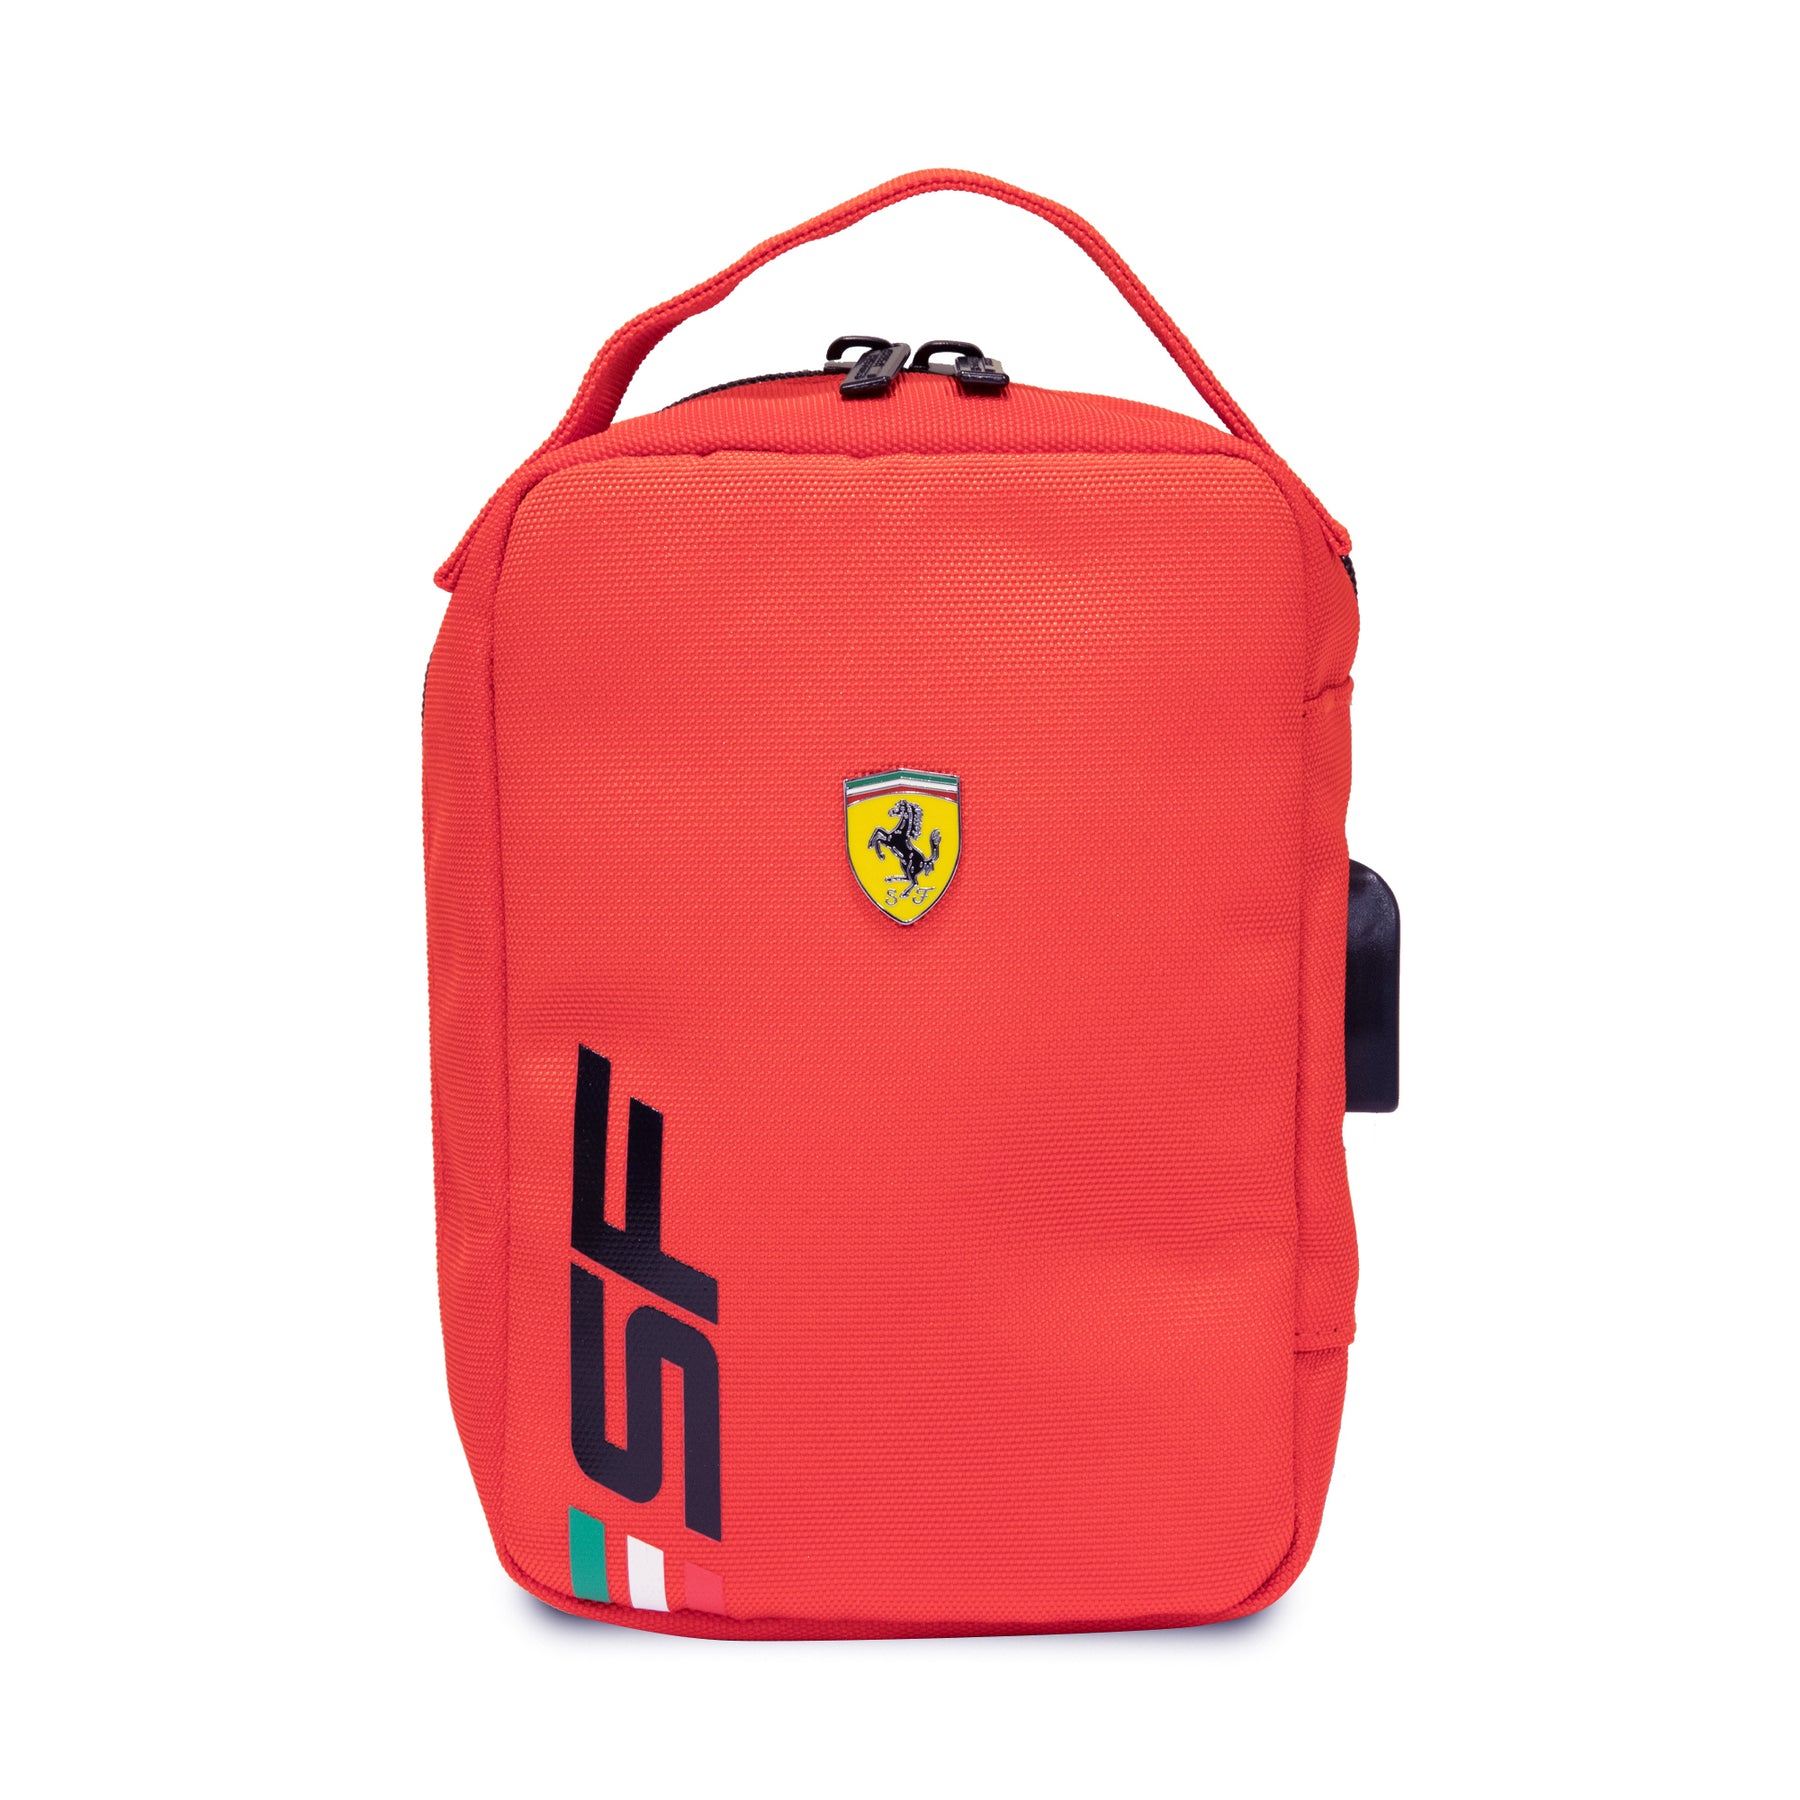 DT: Ferrari F12 Berlinetta Luggage and Literature | PCARMARKET